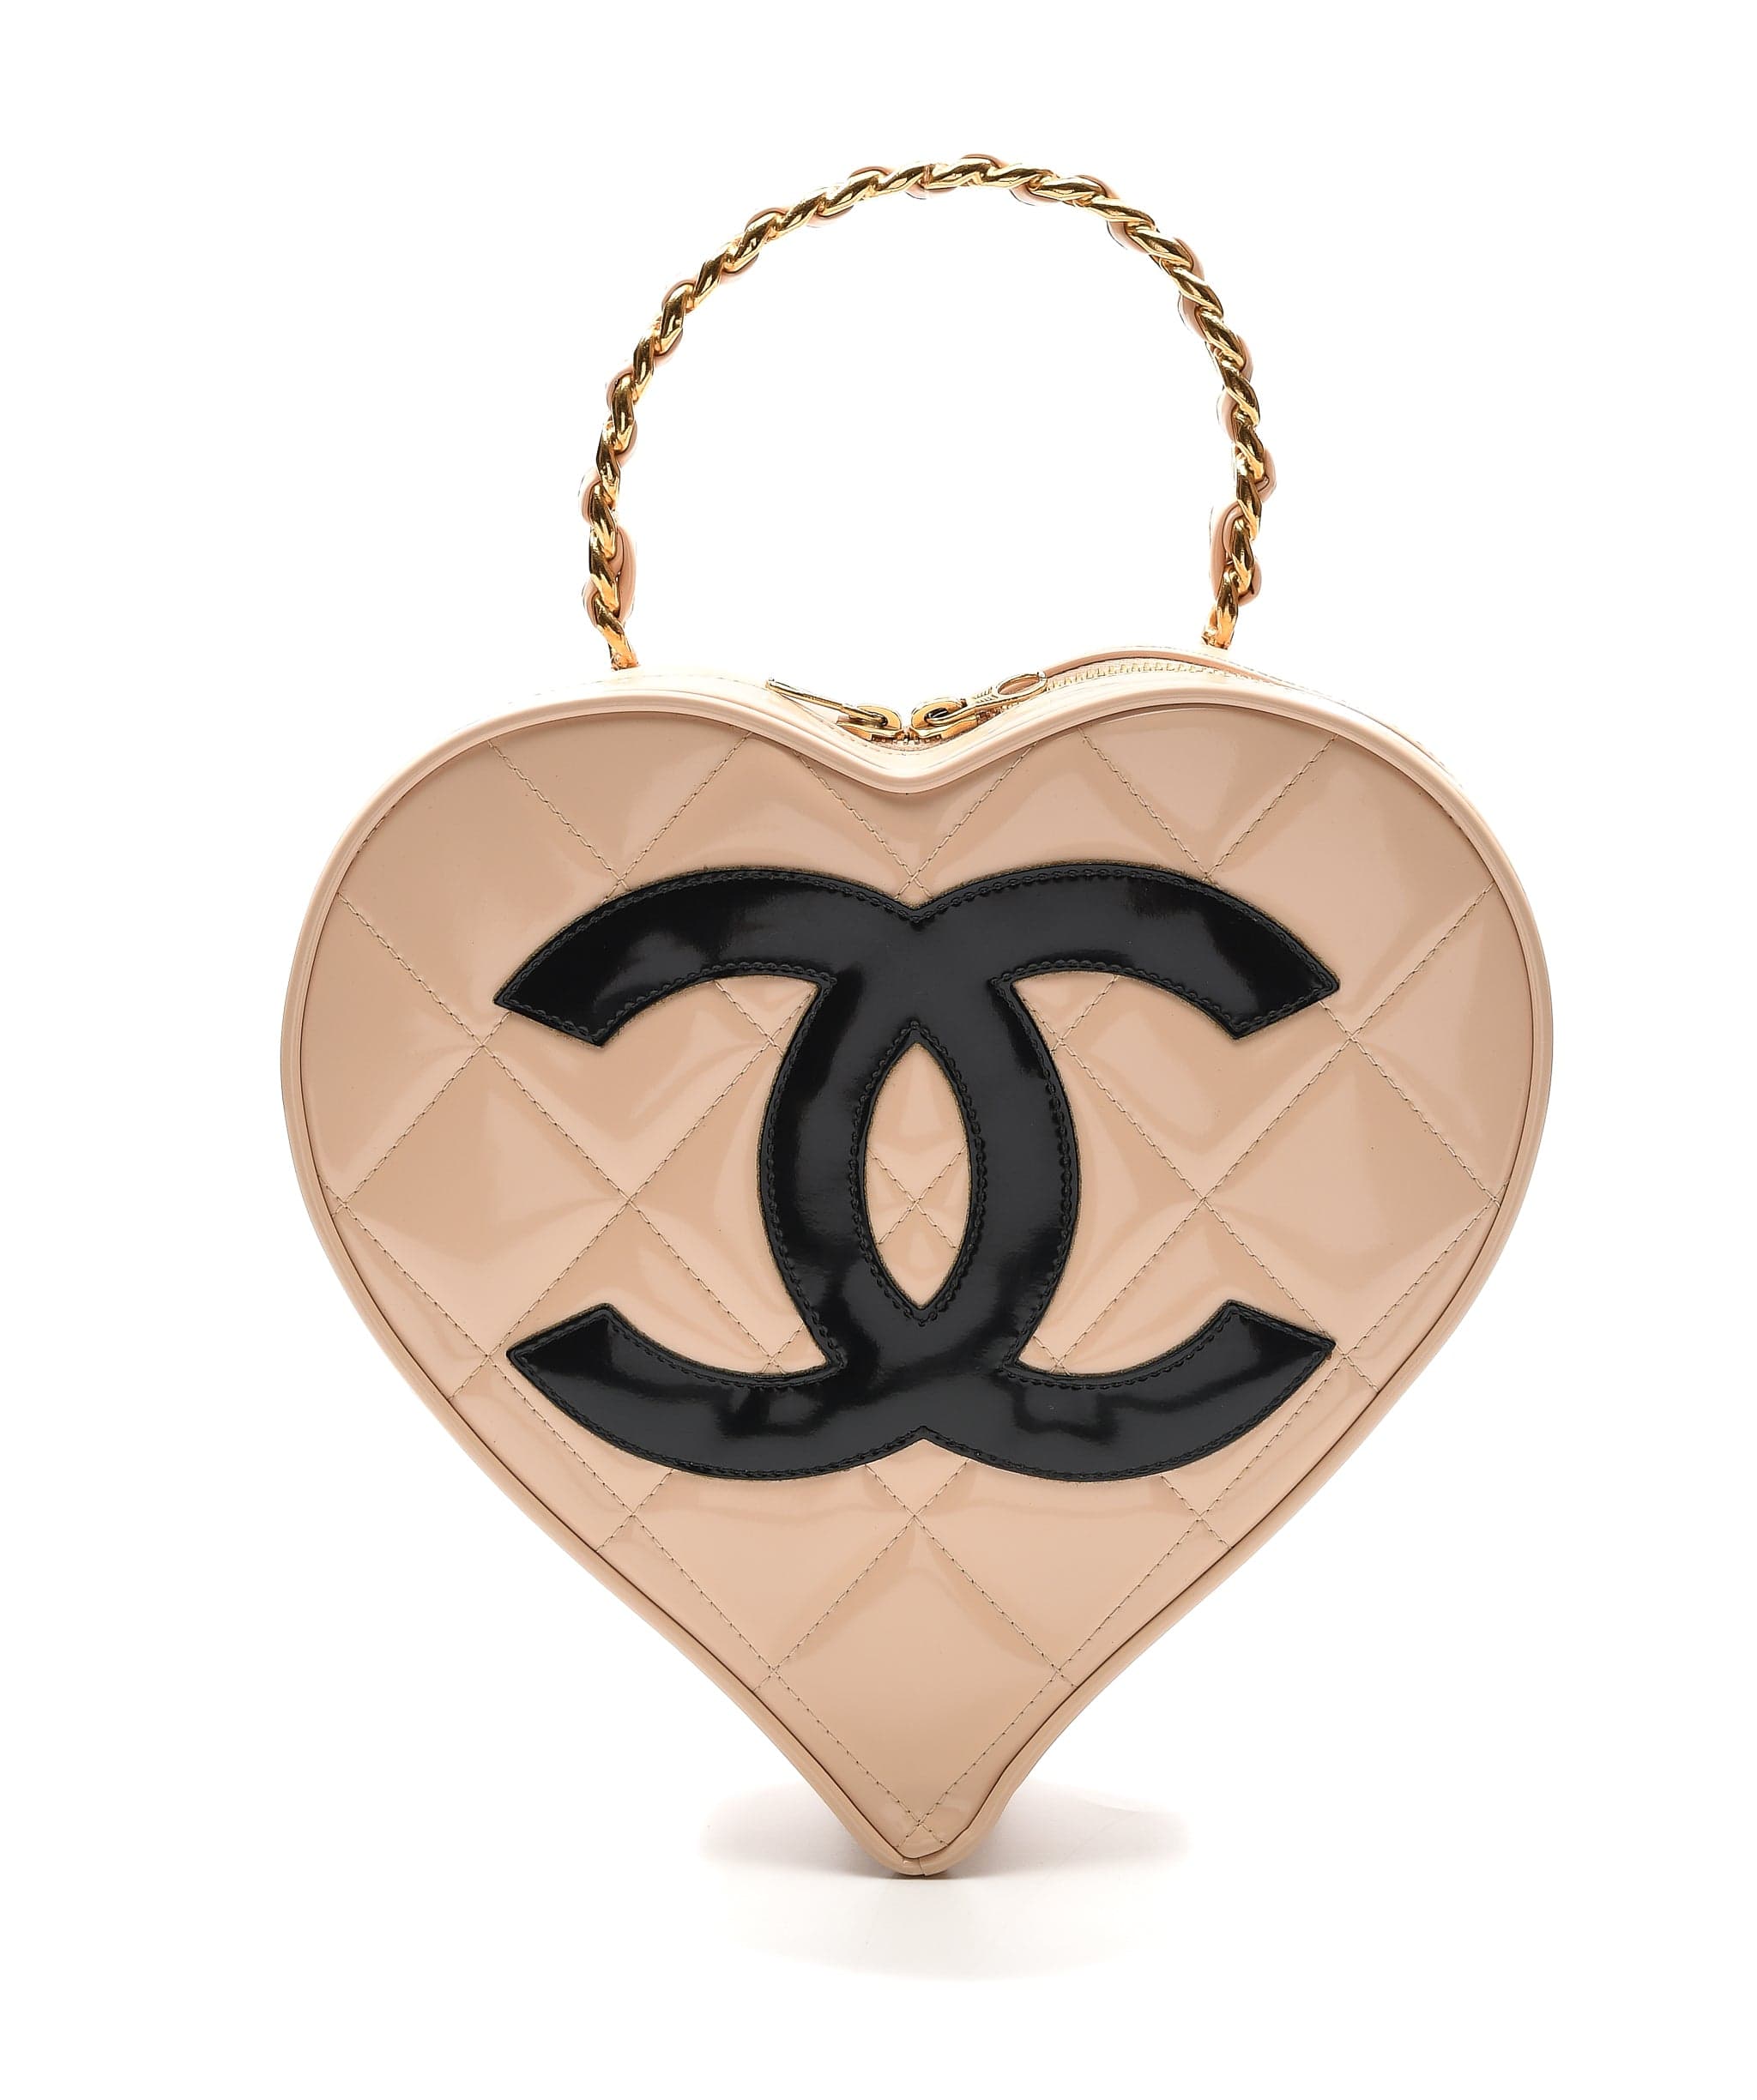 Chanel Black Patent Leather Heart Vanity Handbag 3368411 Auction